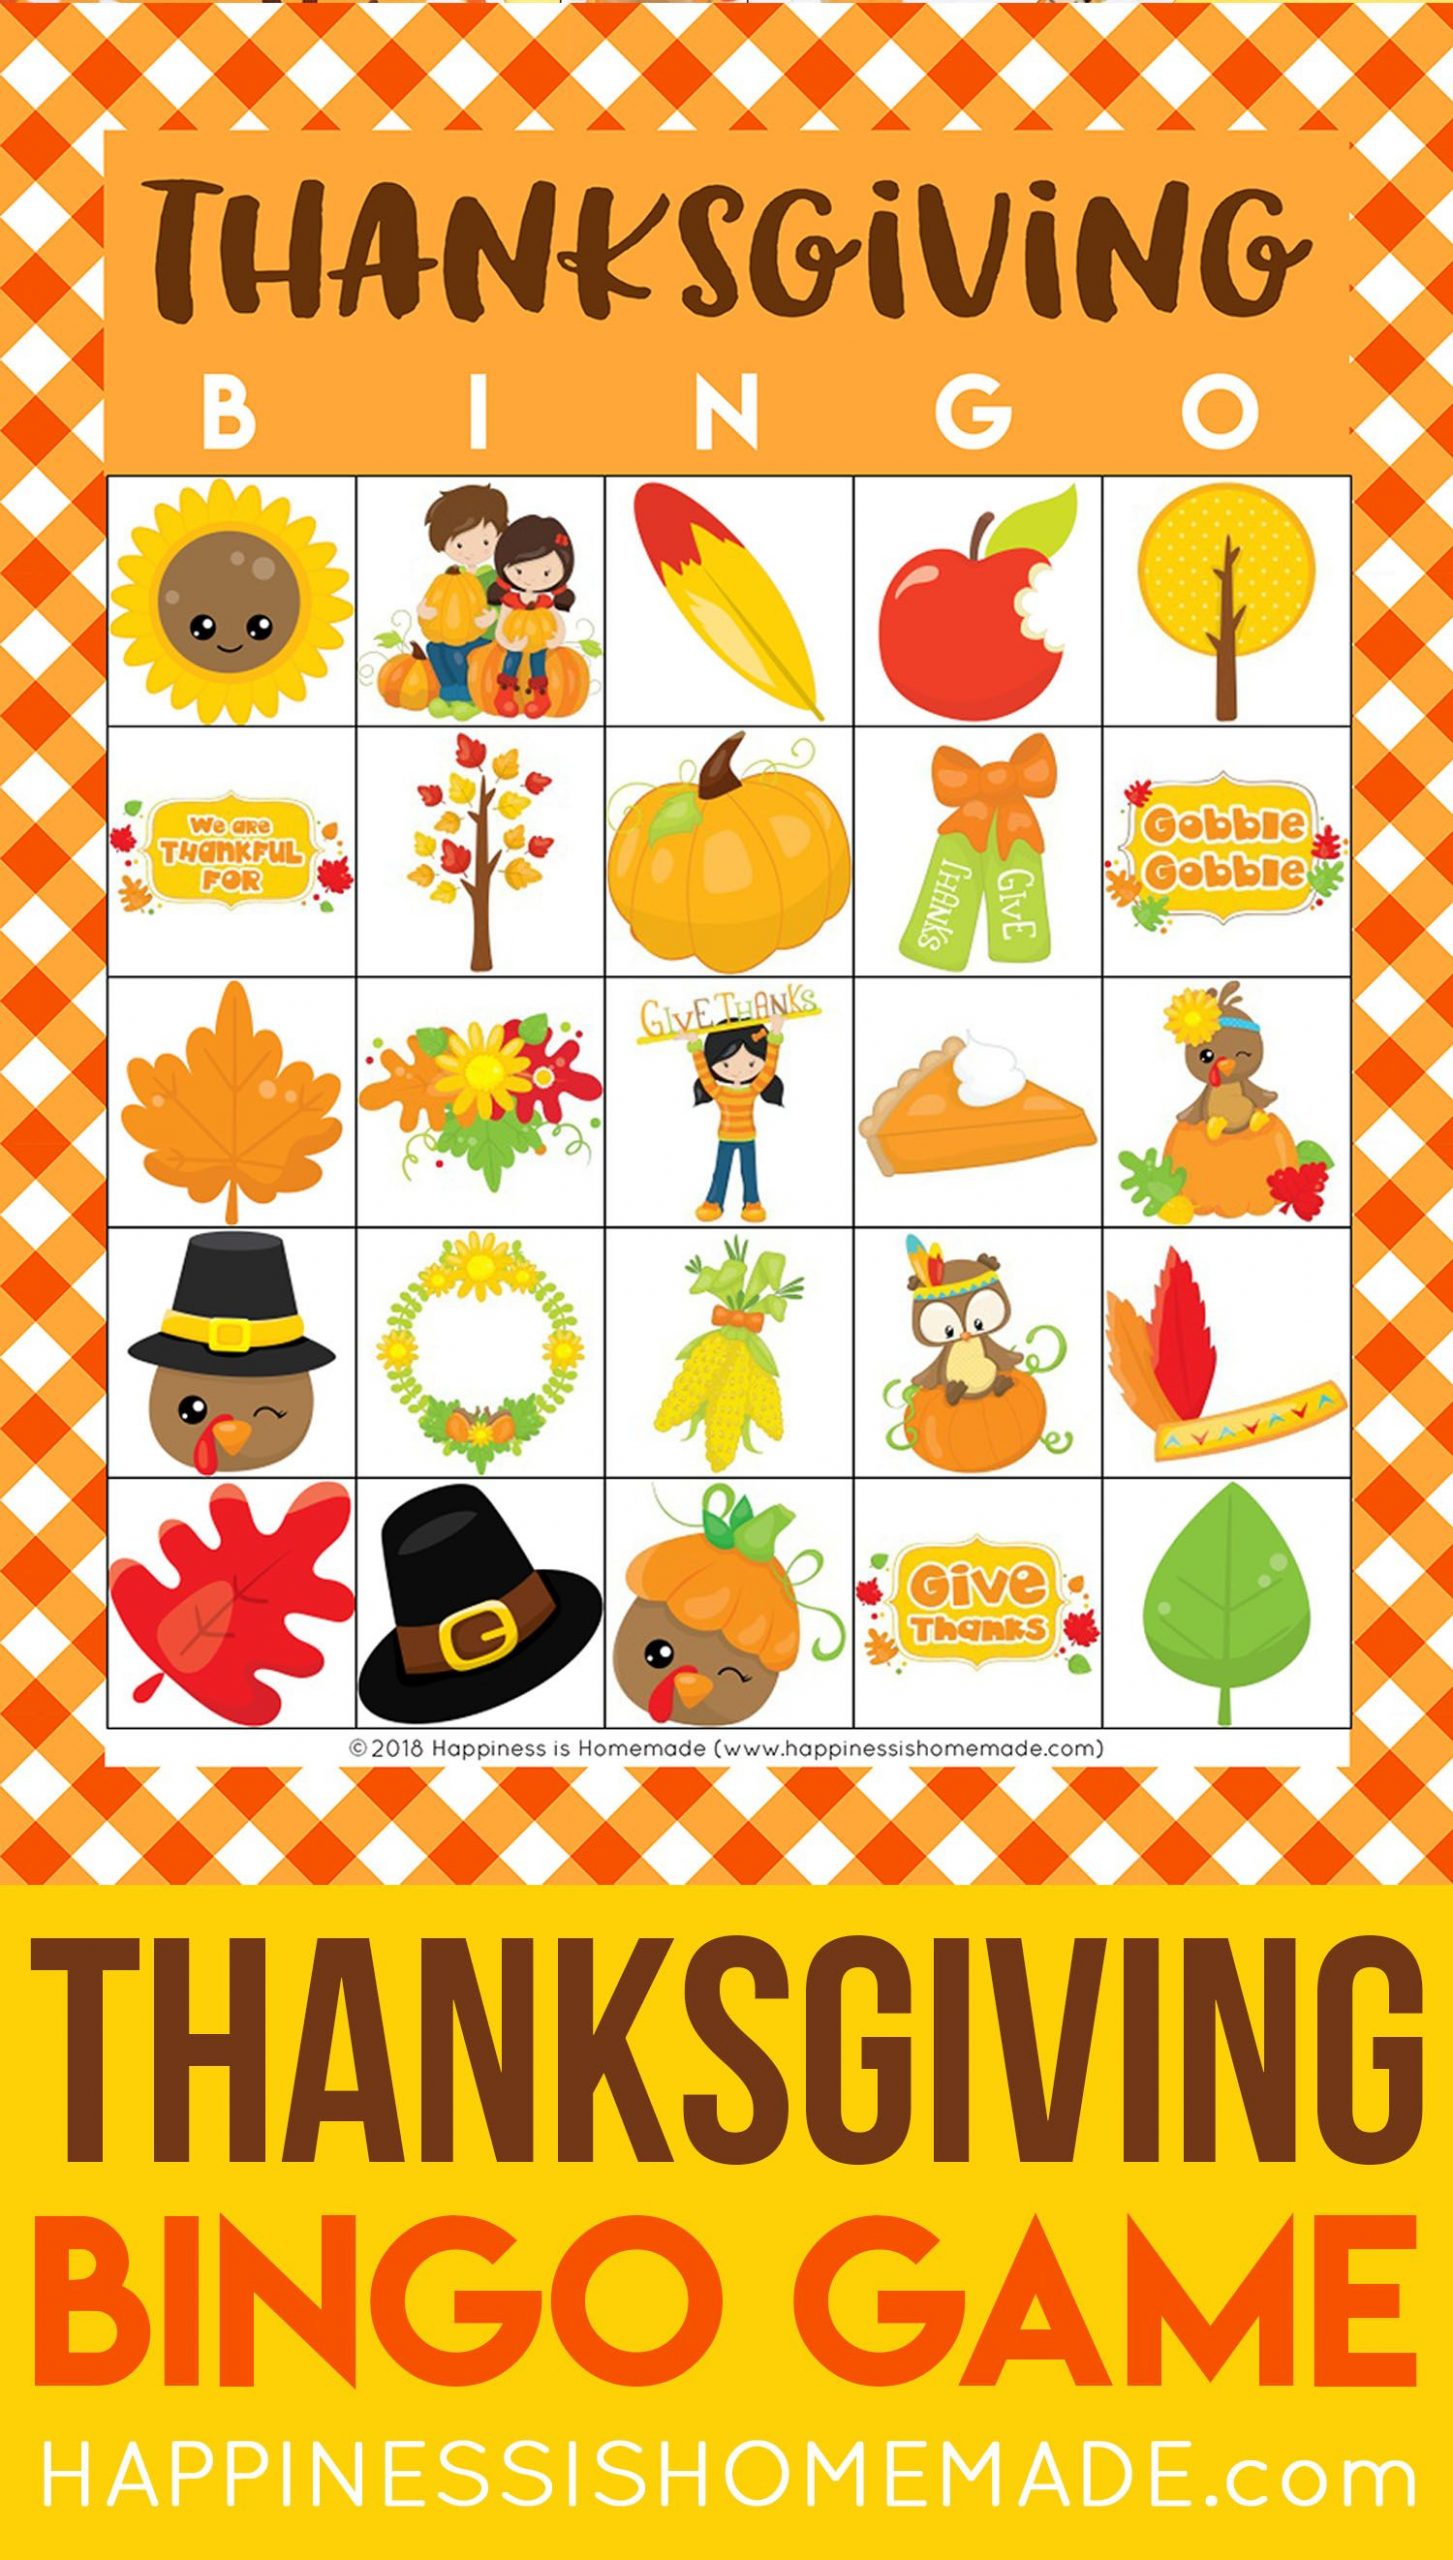 Free Printable Thanksgiving Bingo Cards. This Thanksgiving